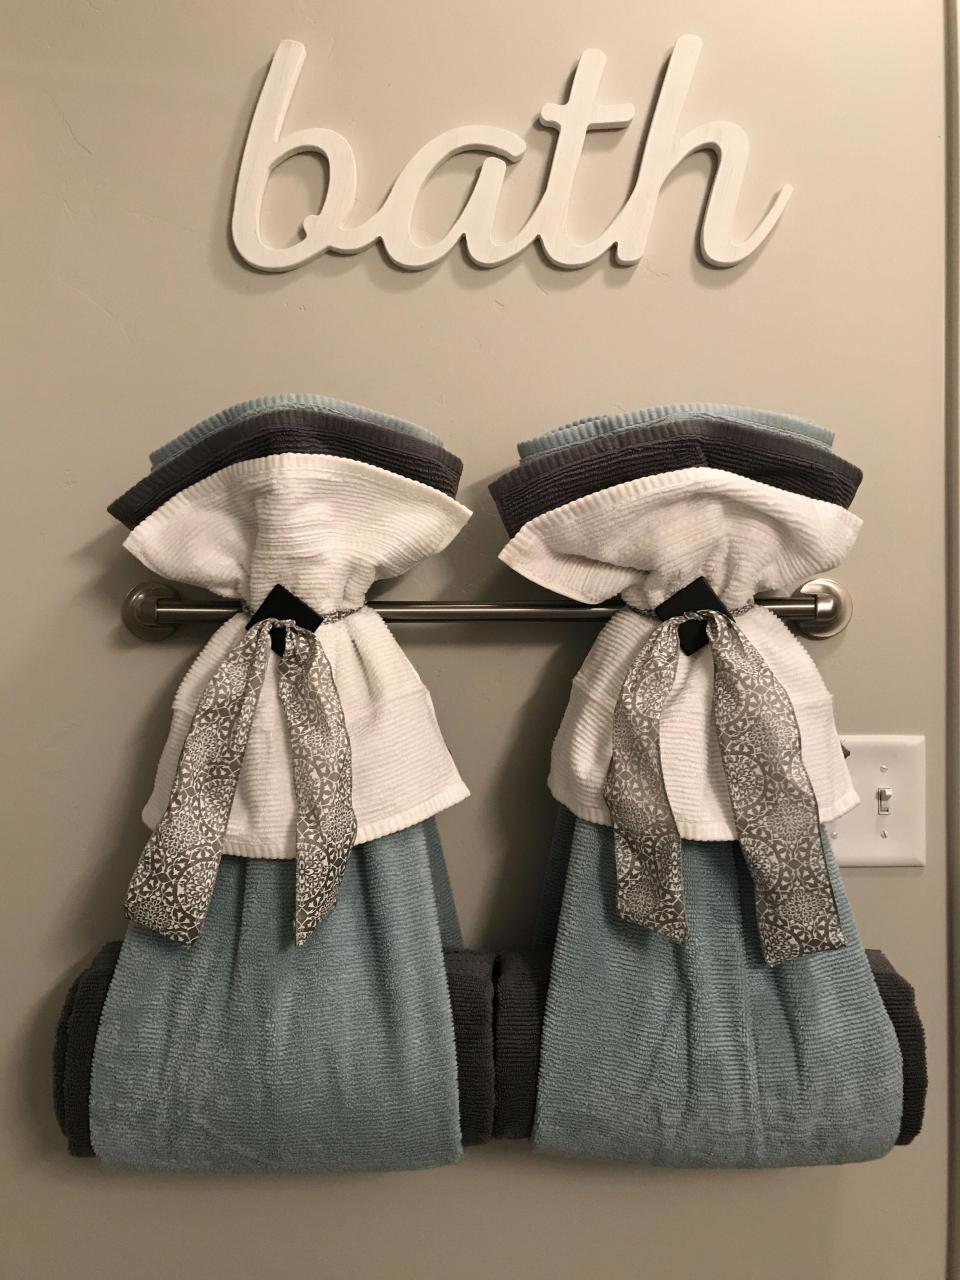 Decorating With Bathroom Towels Towel rack bathroom hanging, Bathroom